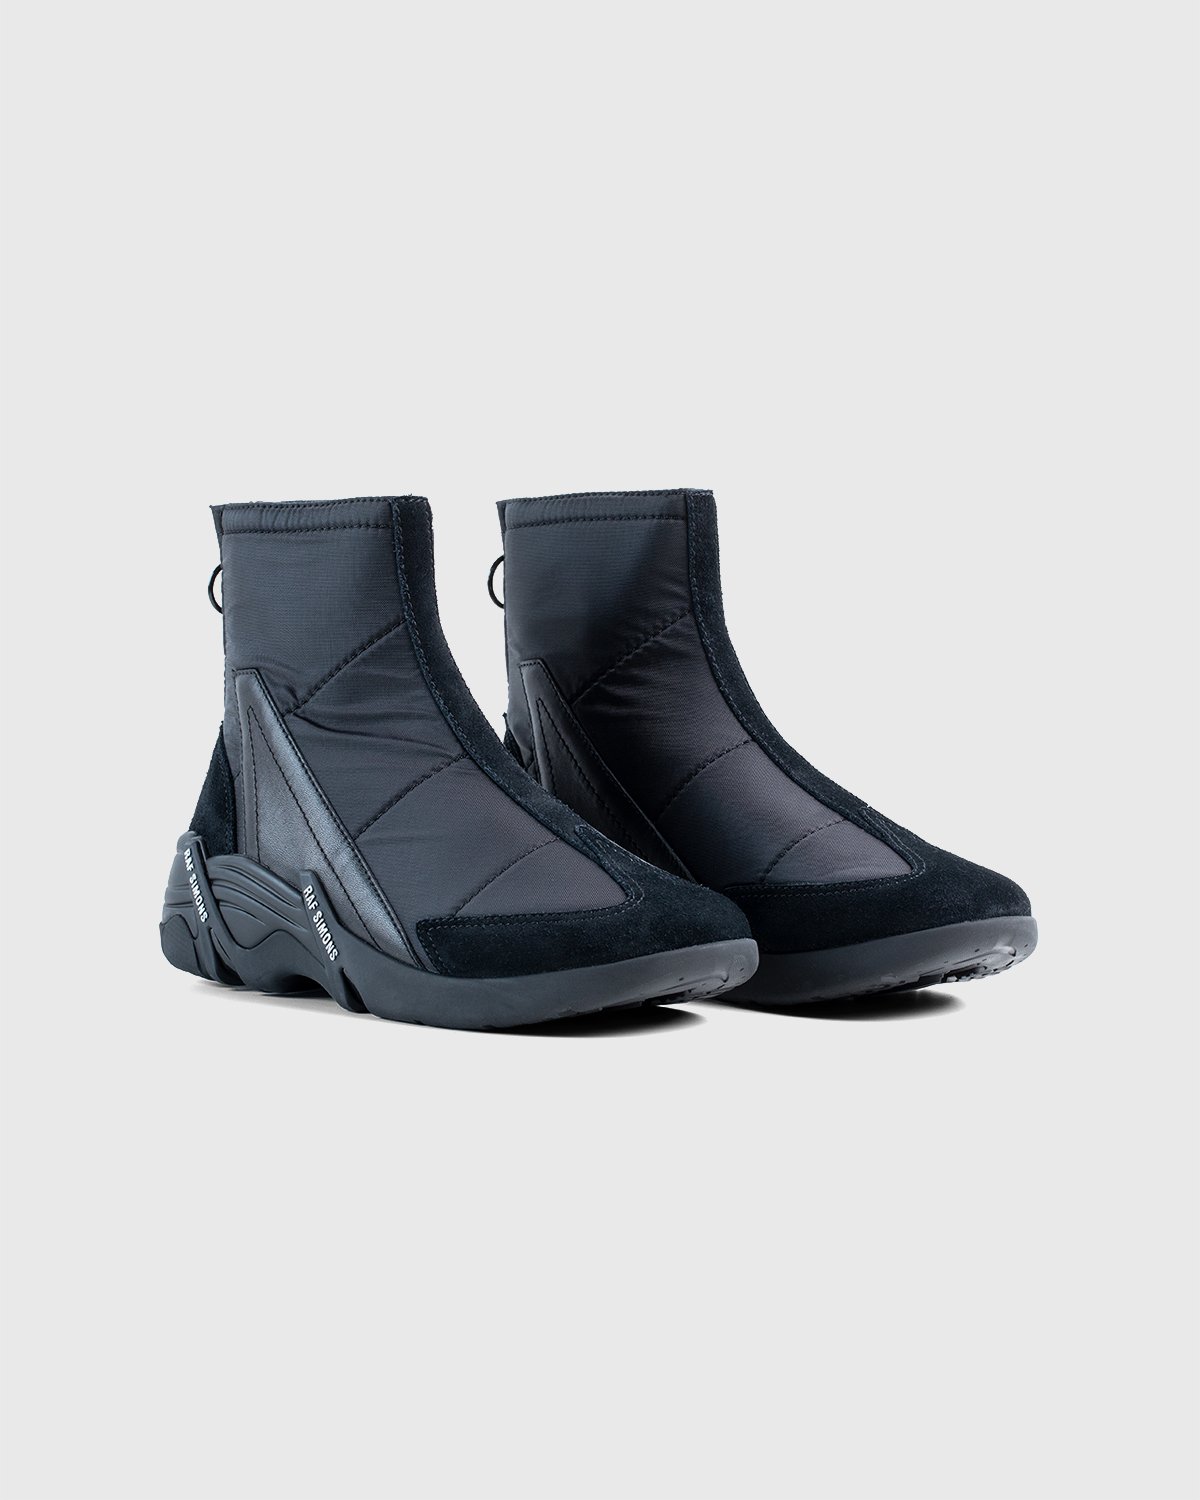 Raf Simons - Cylon 22 Black - Footwear - Black - Image 2